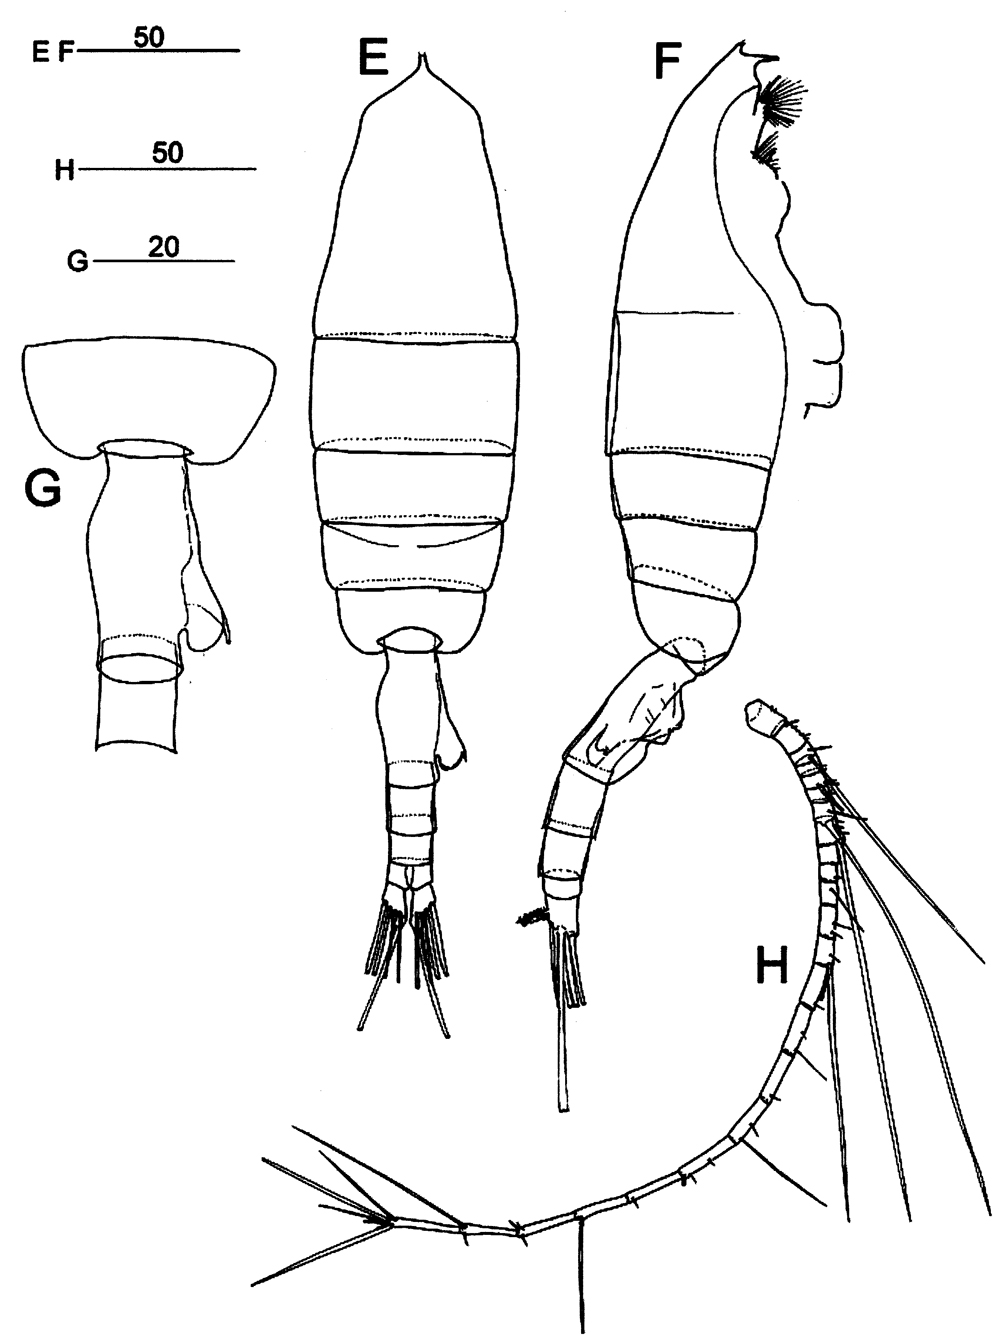 Species Euchaeta longicornis - Plate 9 of morphological figures